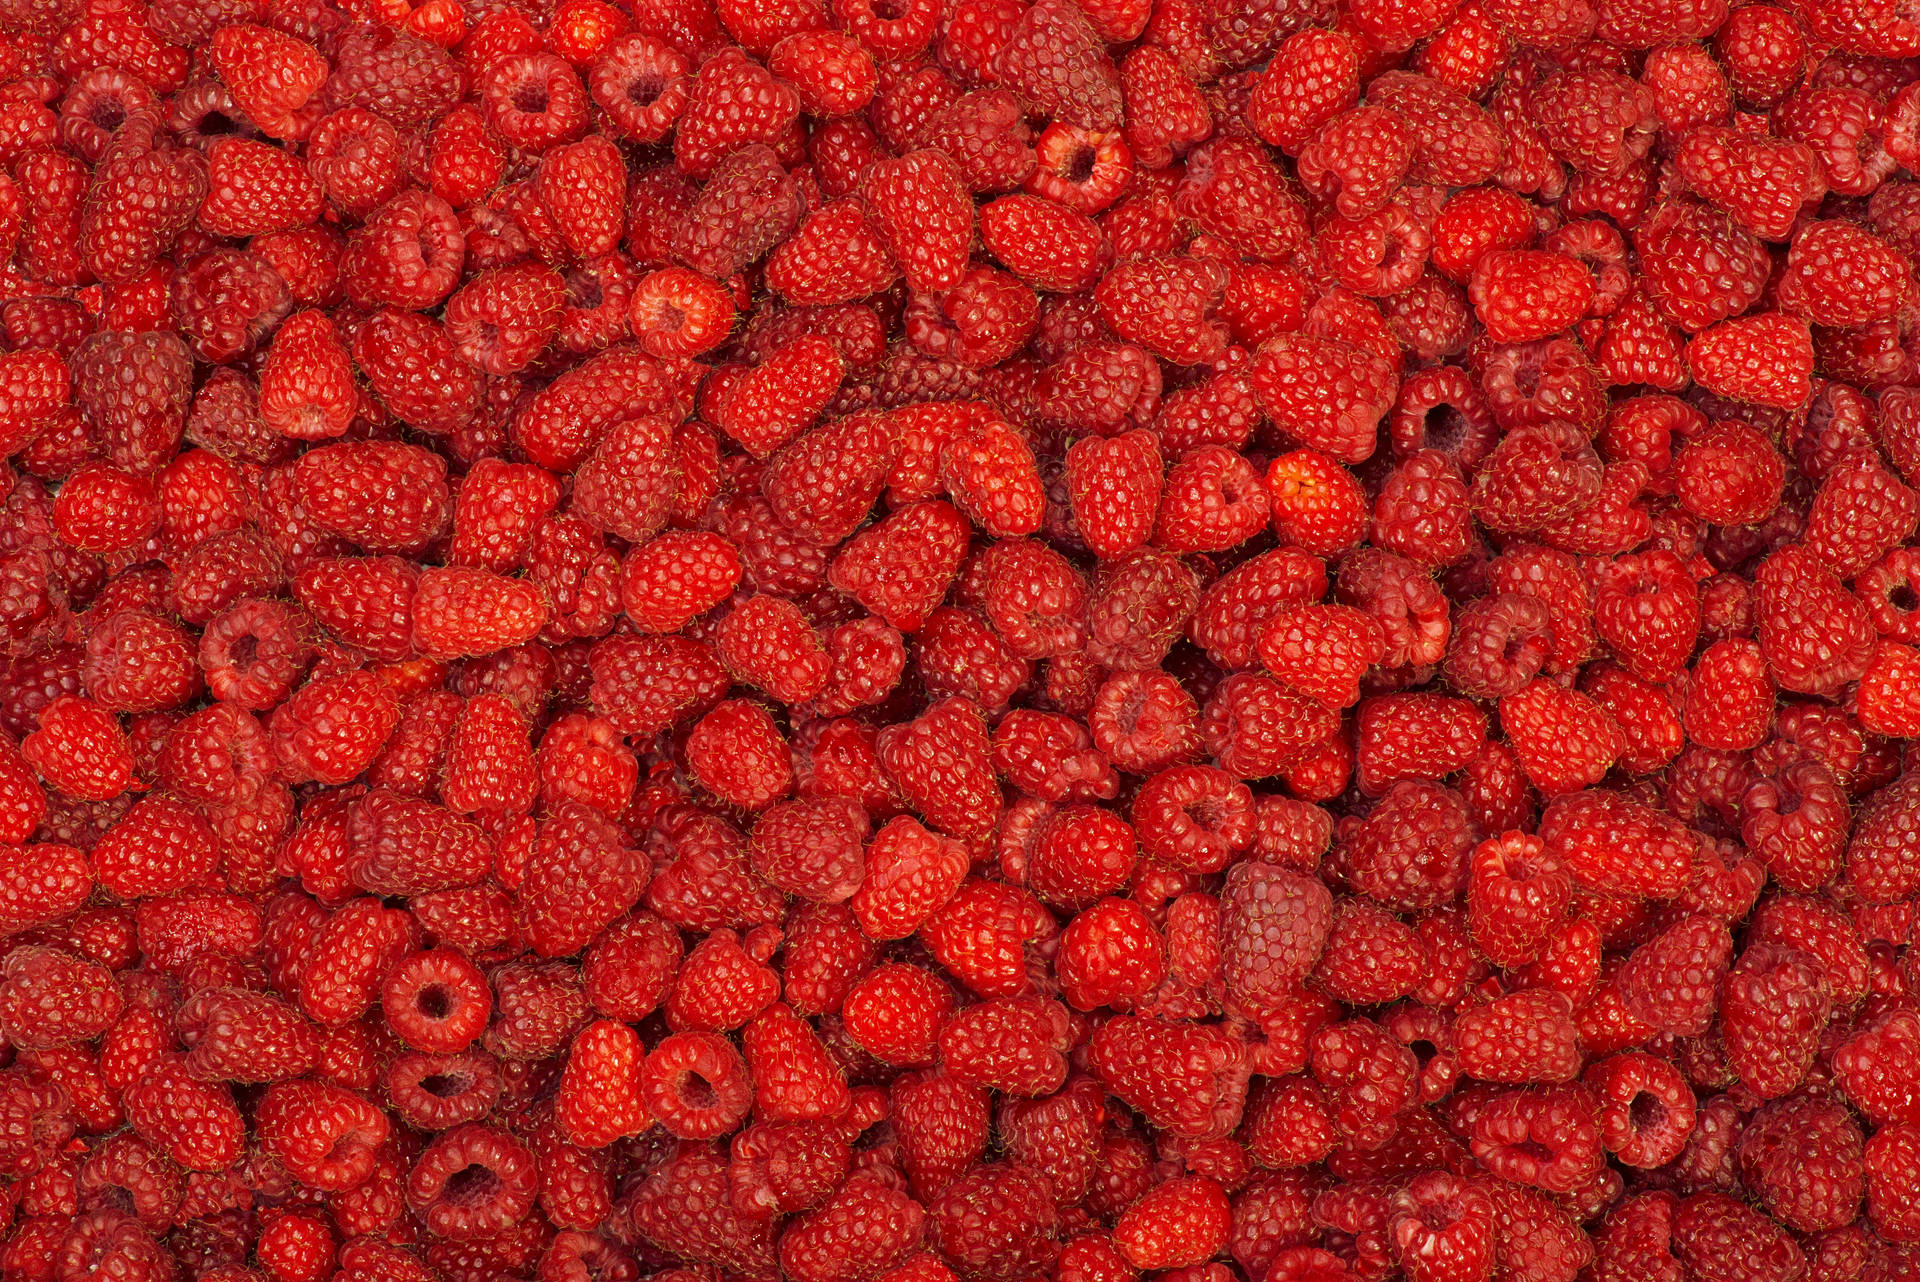 Red 4k Uhd Raspberries Fruit Picture